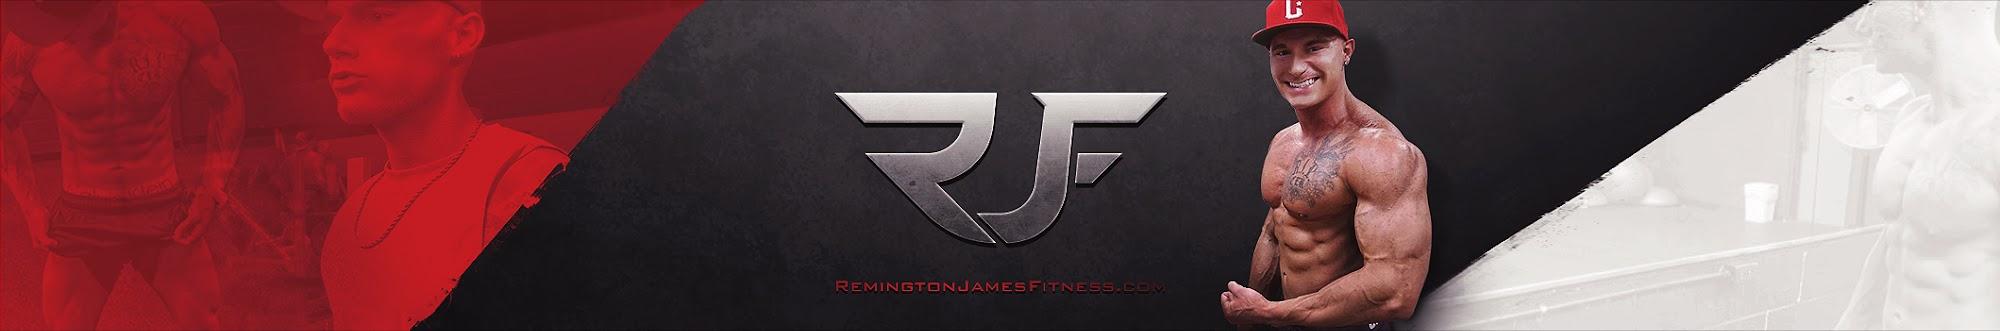 Remington James